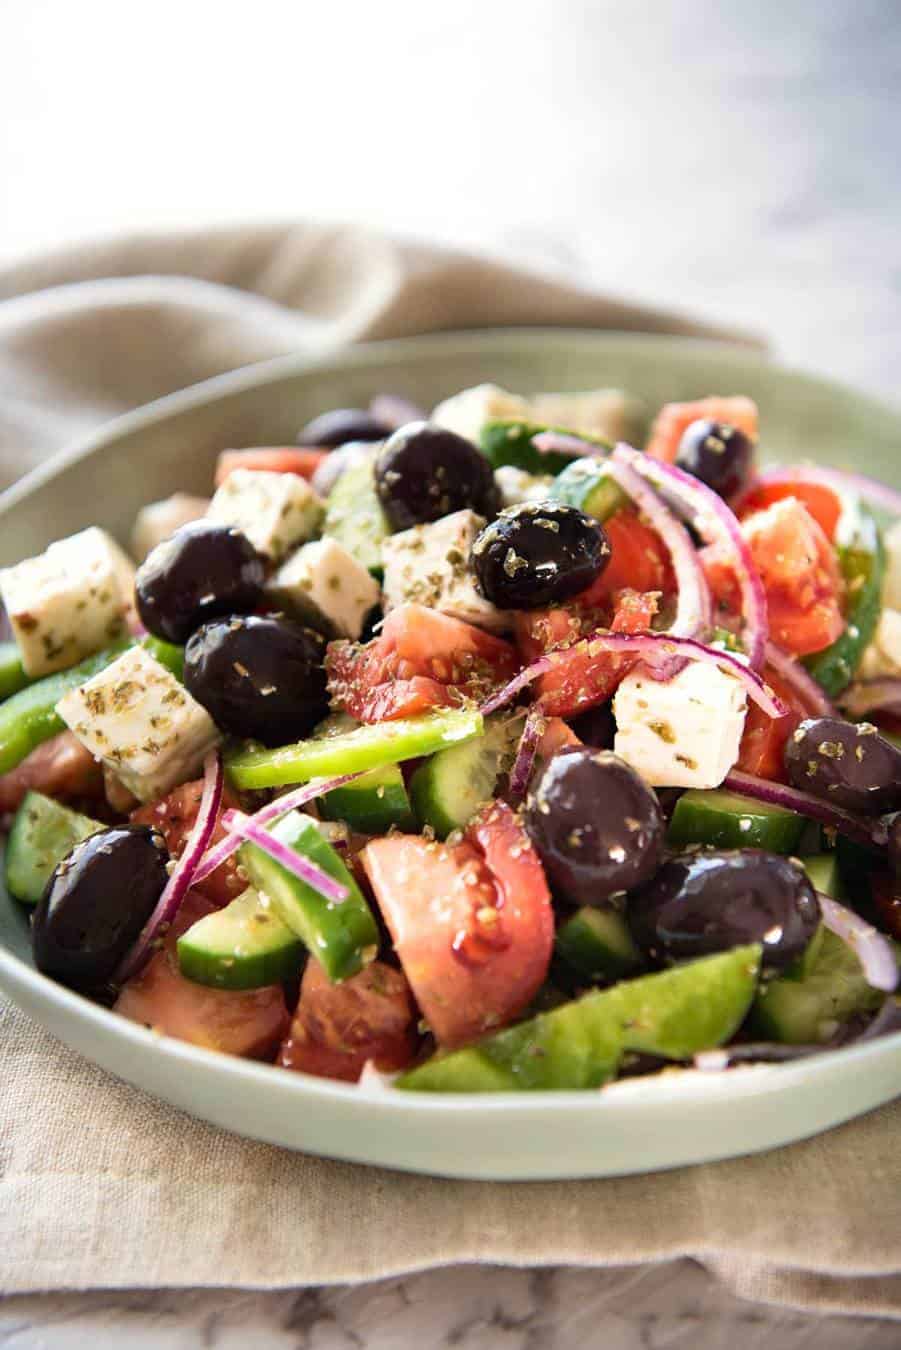 Greek Salad with Homemade Greek Salad Dressing from https://www.recipetineats.com/